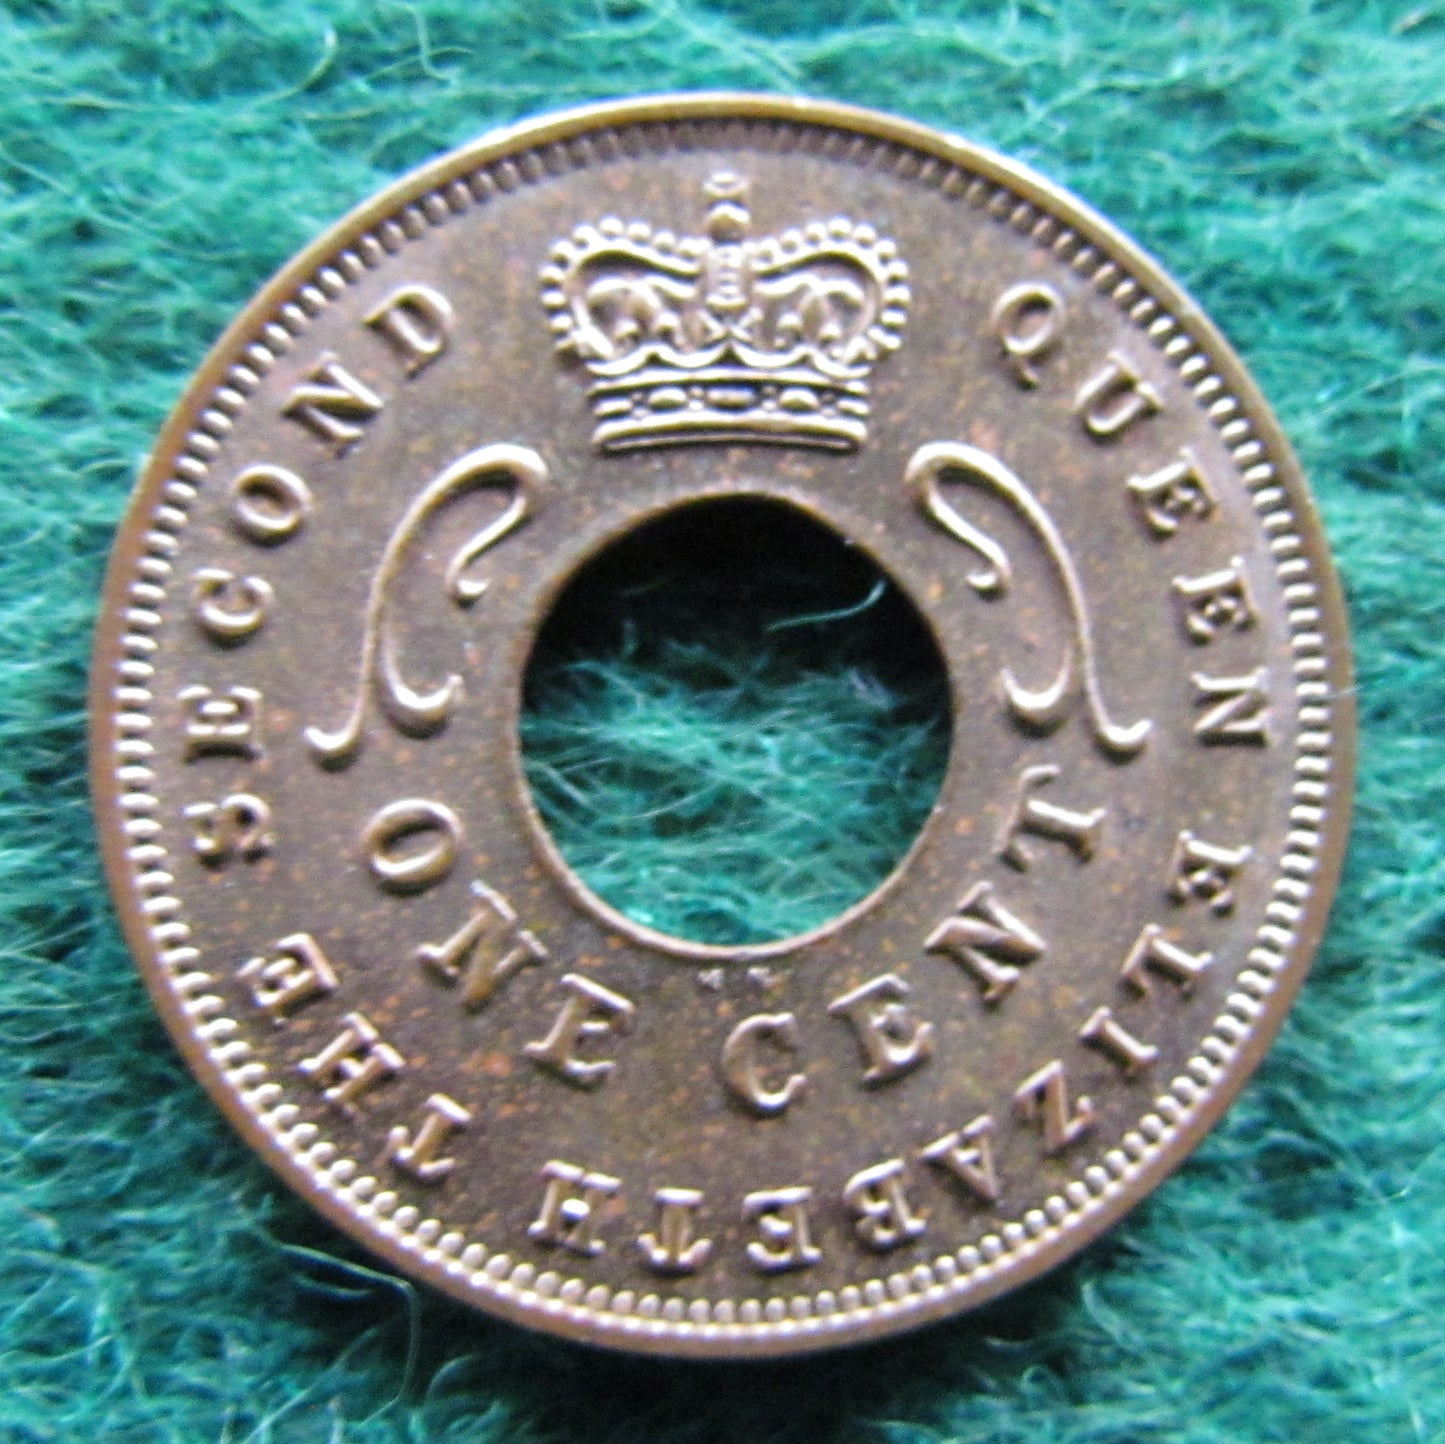 East Africa 1959 1 Cent Queen Elizabeth II Coin - Circulated